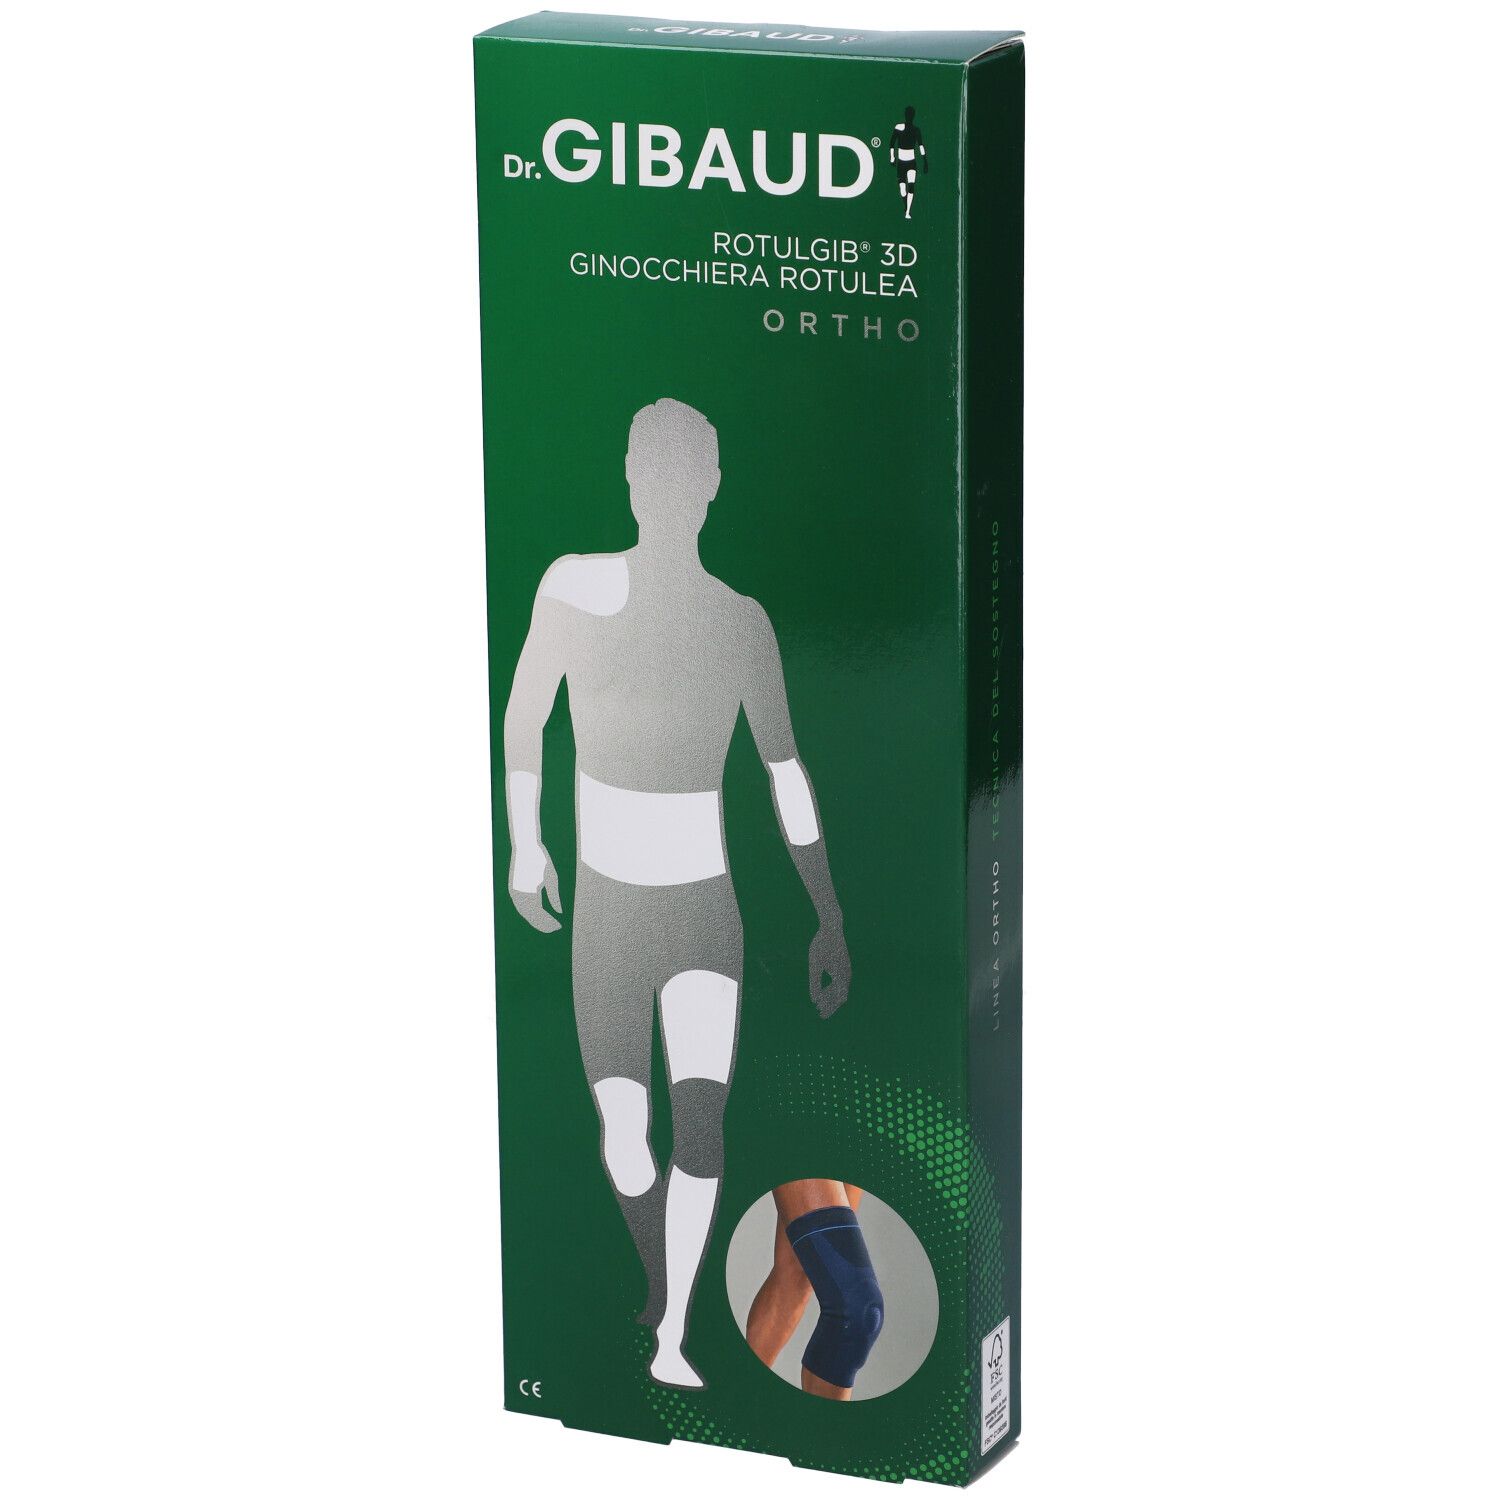 Gibaud Ortho Rotulgib 3D Gin02